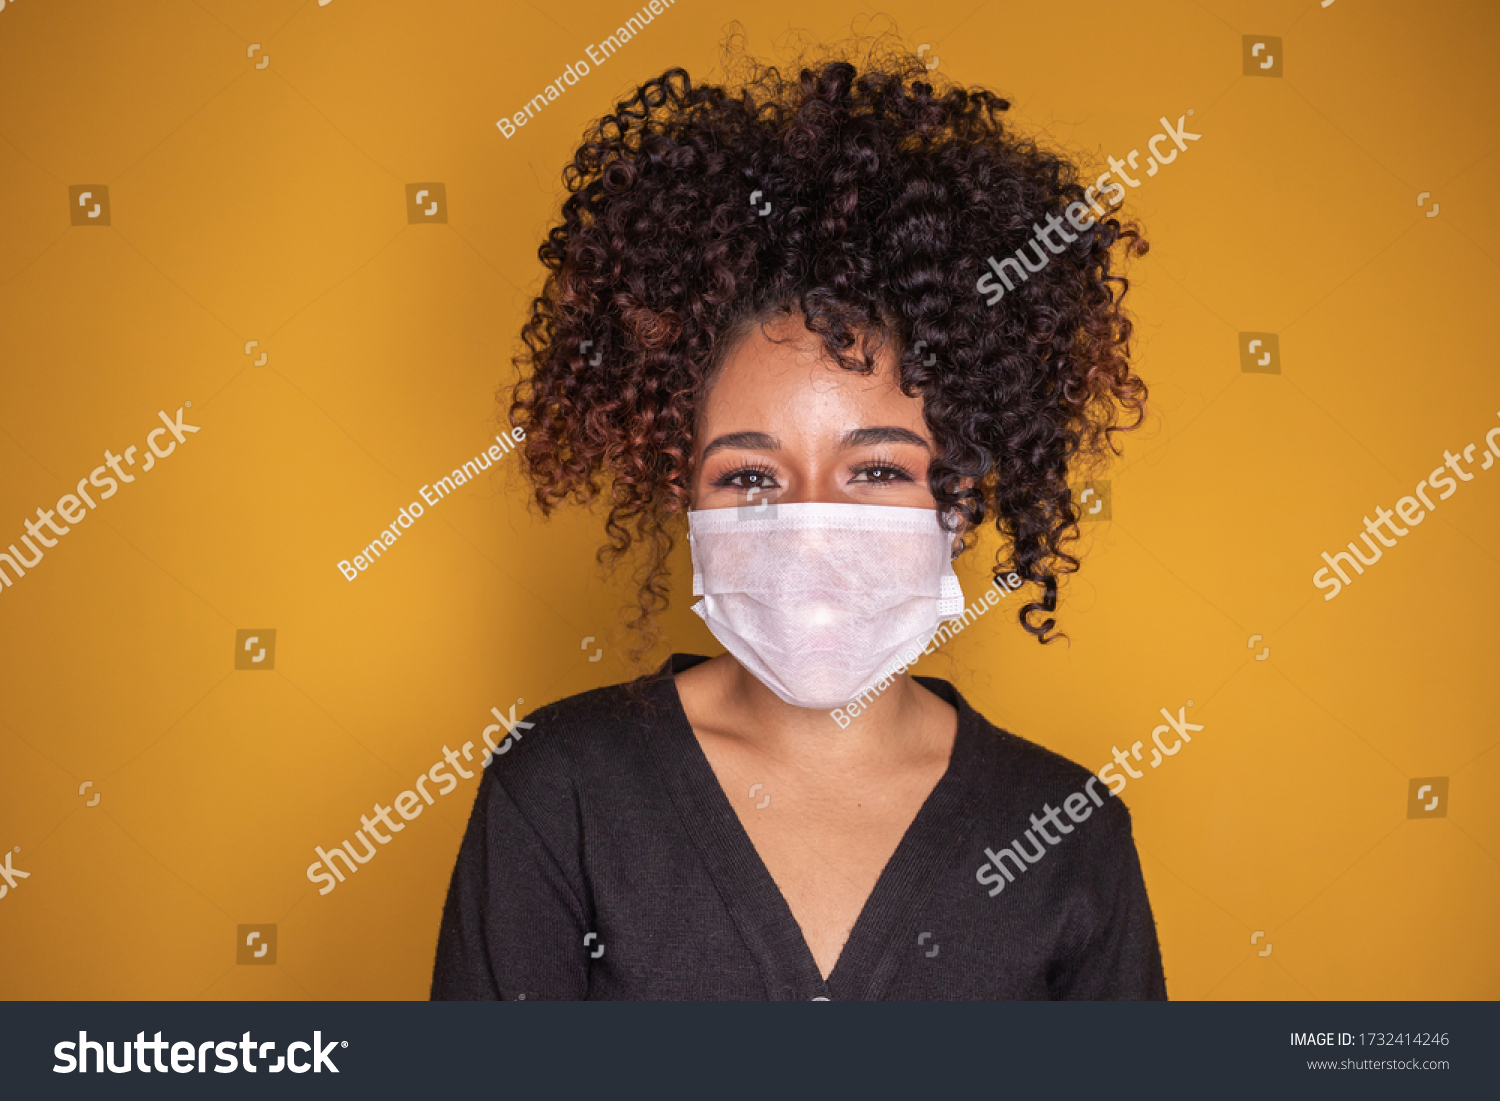 young girl wearing protective mask in corona virus pandemic, covid-19 #1732414246